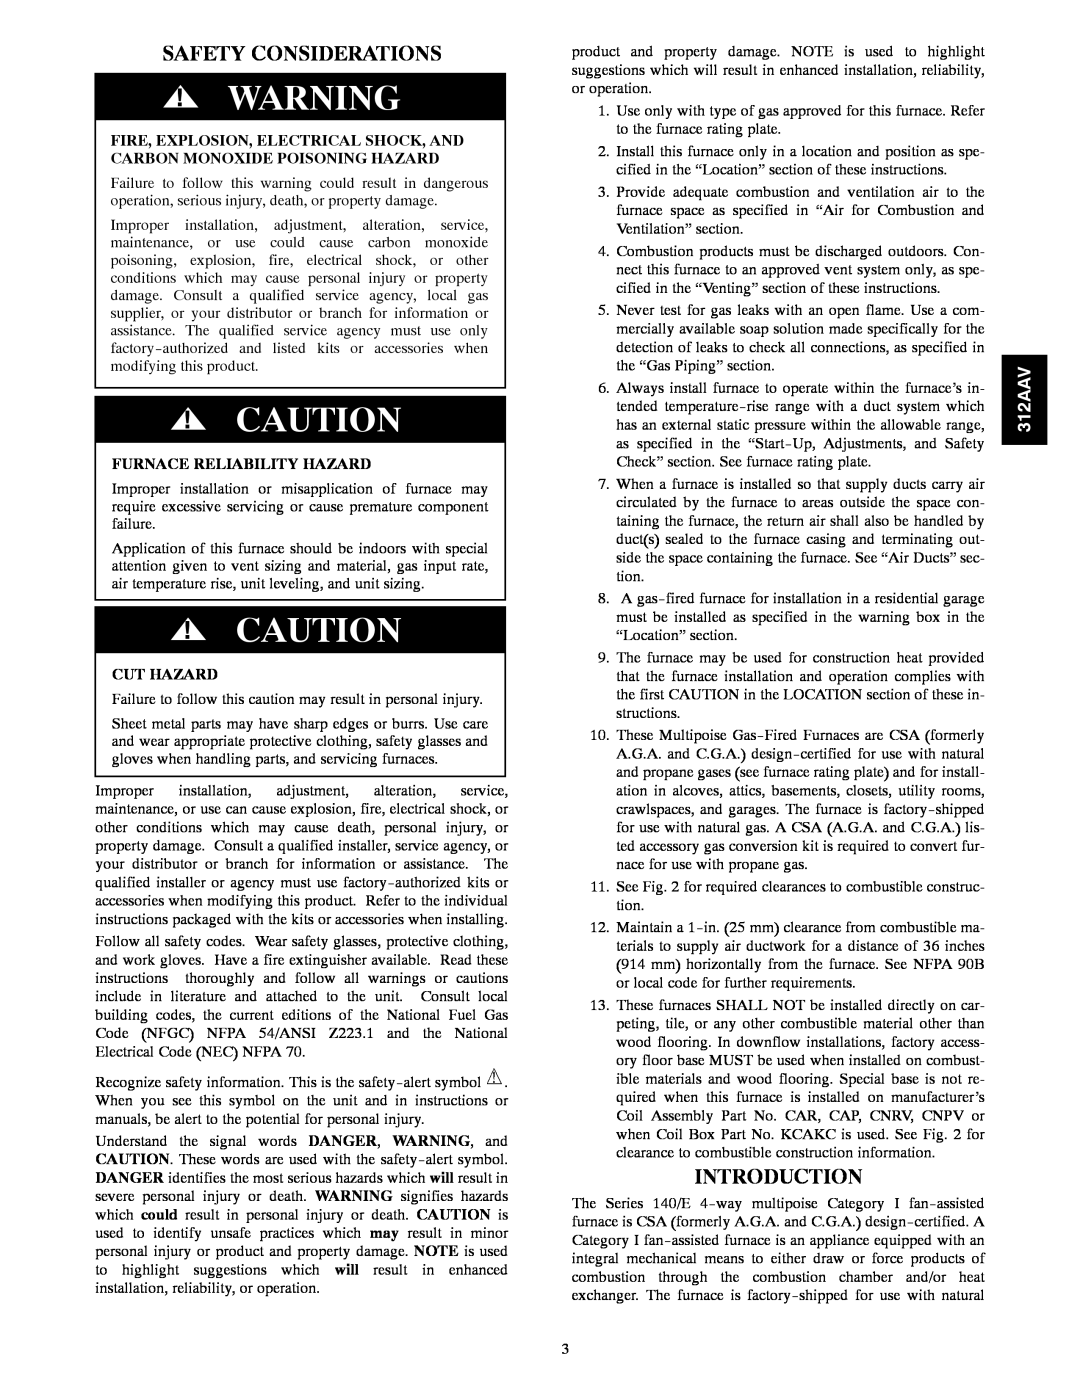 Bryant 312AAV/JAV instruction manual Safety Considerations, Introduction, Furnace Reliability Hazard, Cut Hazard 